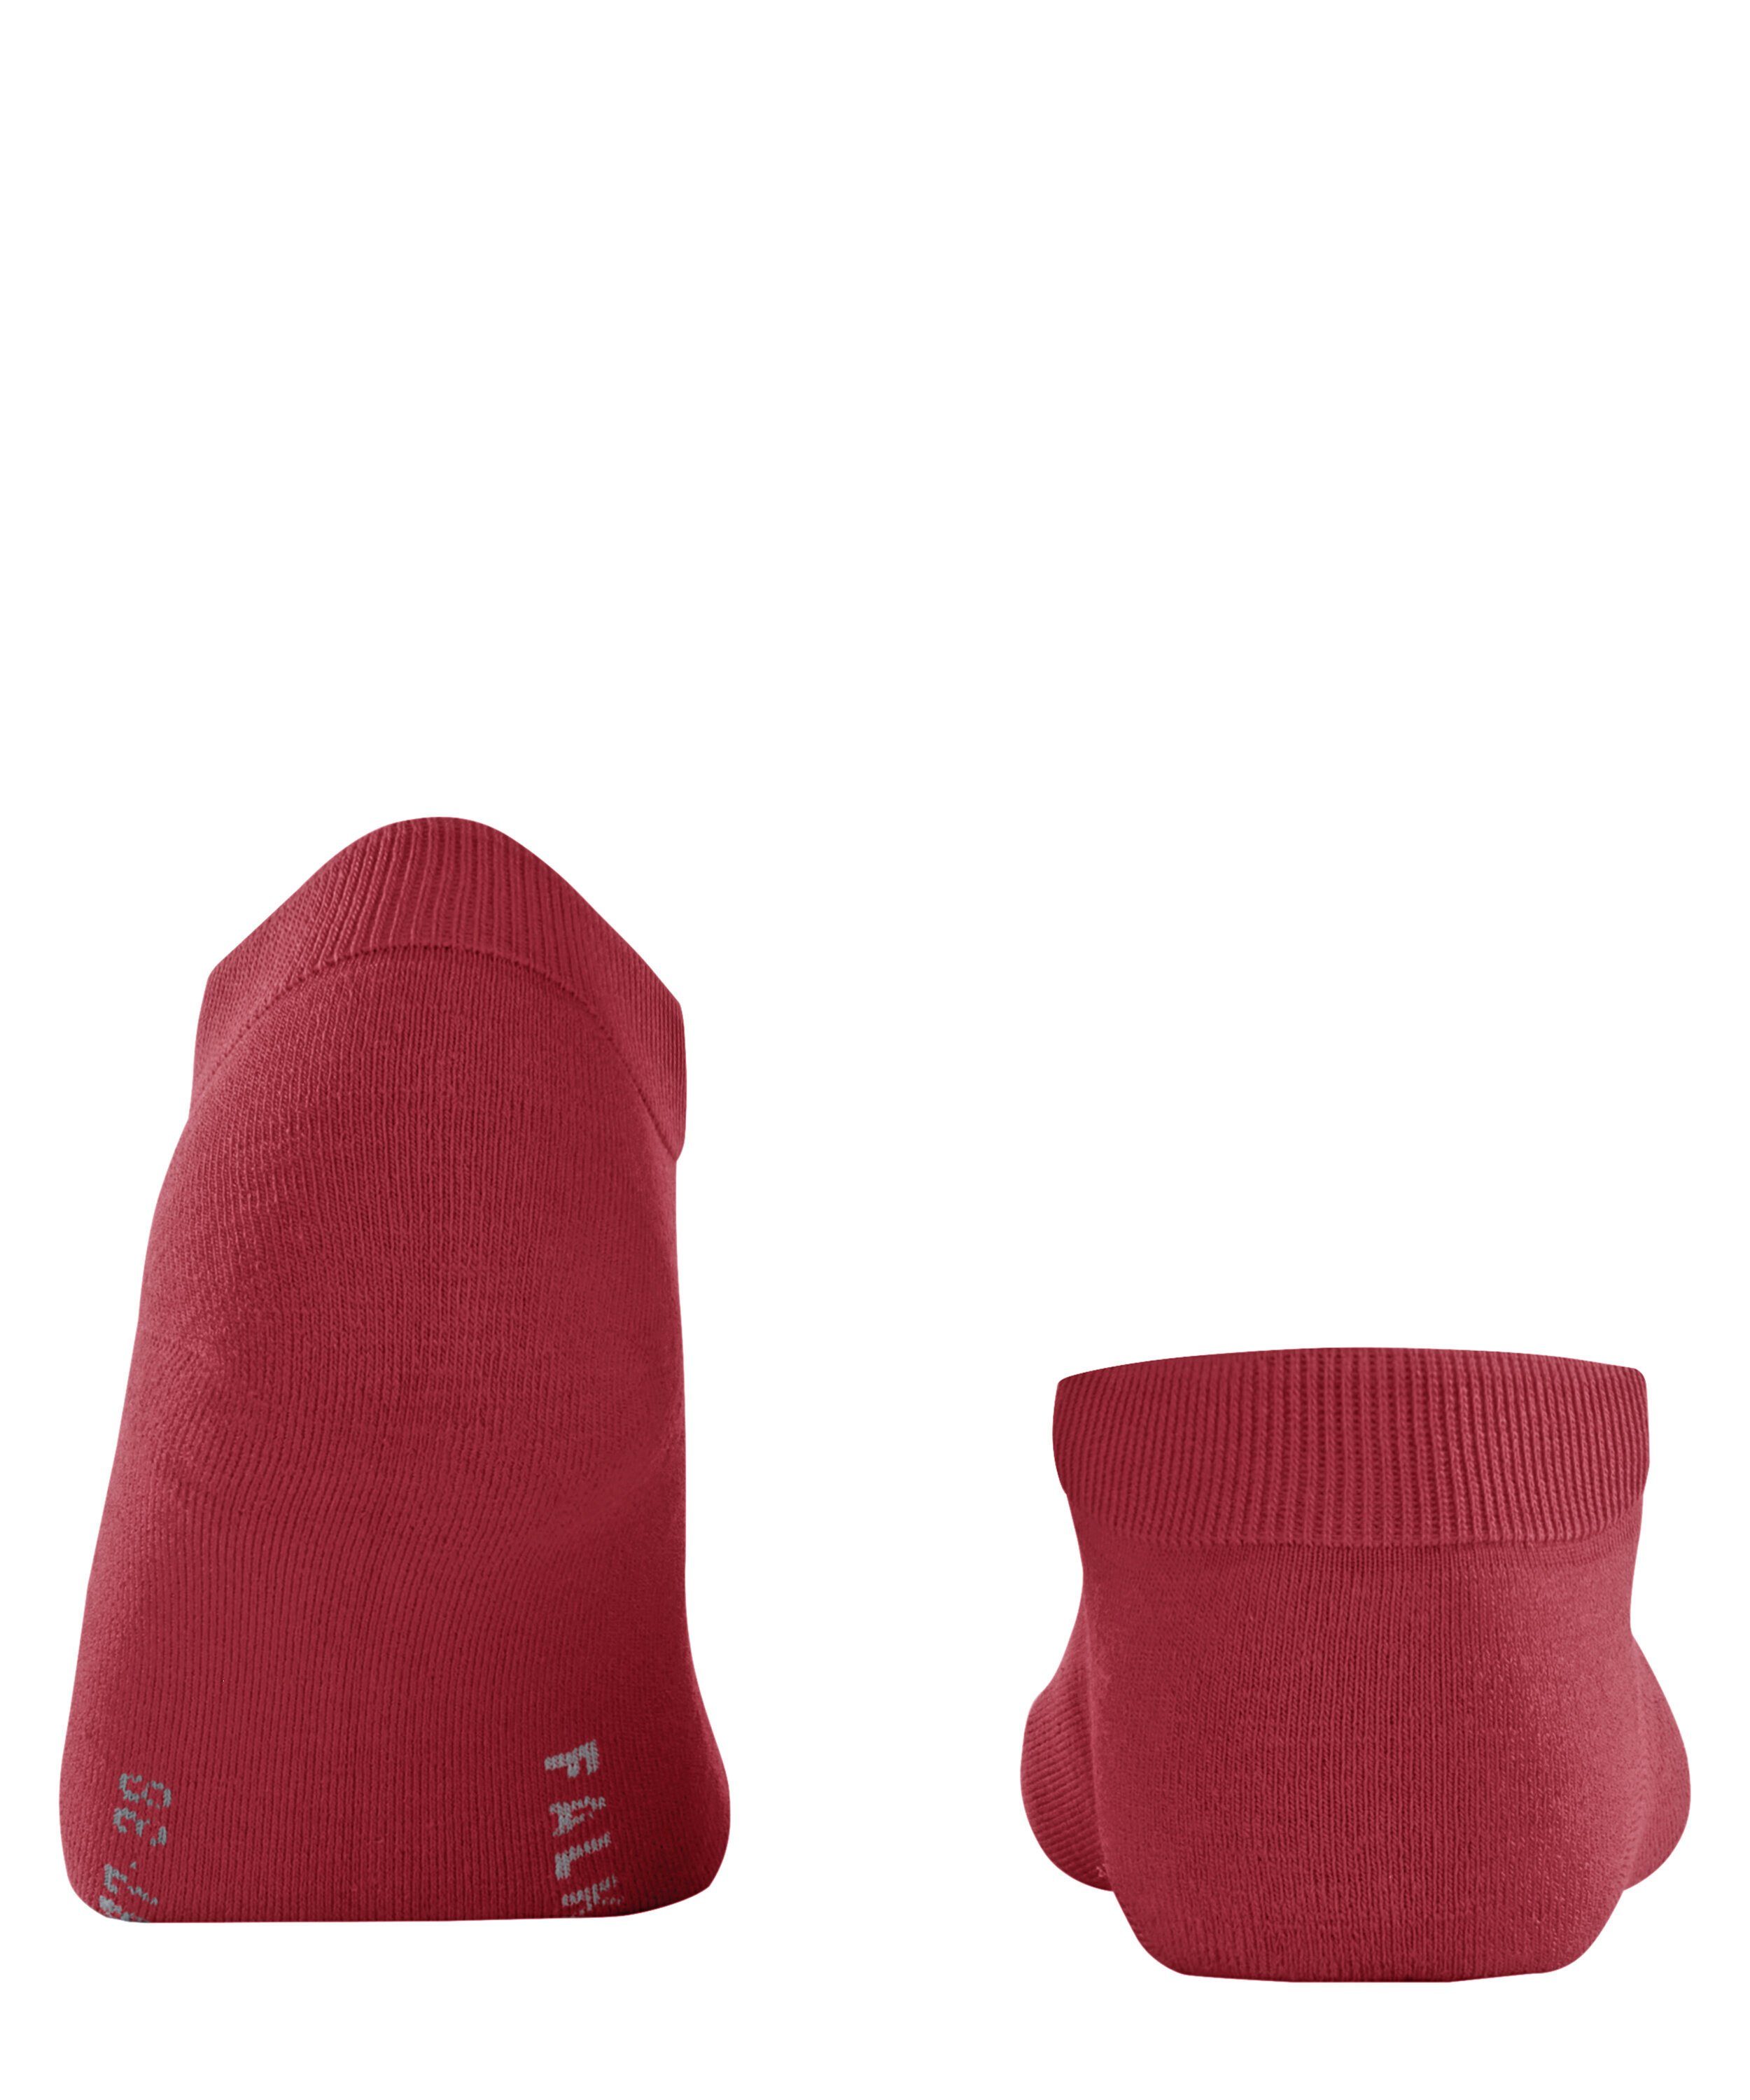 Mischung ClimaWool (8228) aus Sneakersocken klimaregulierender Wolle-Lyocell scarlet (1-Paar) FALKE